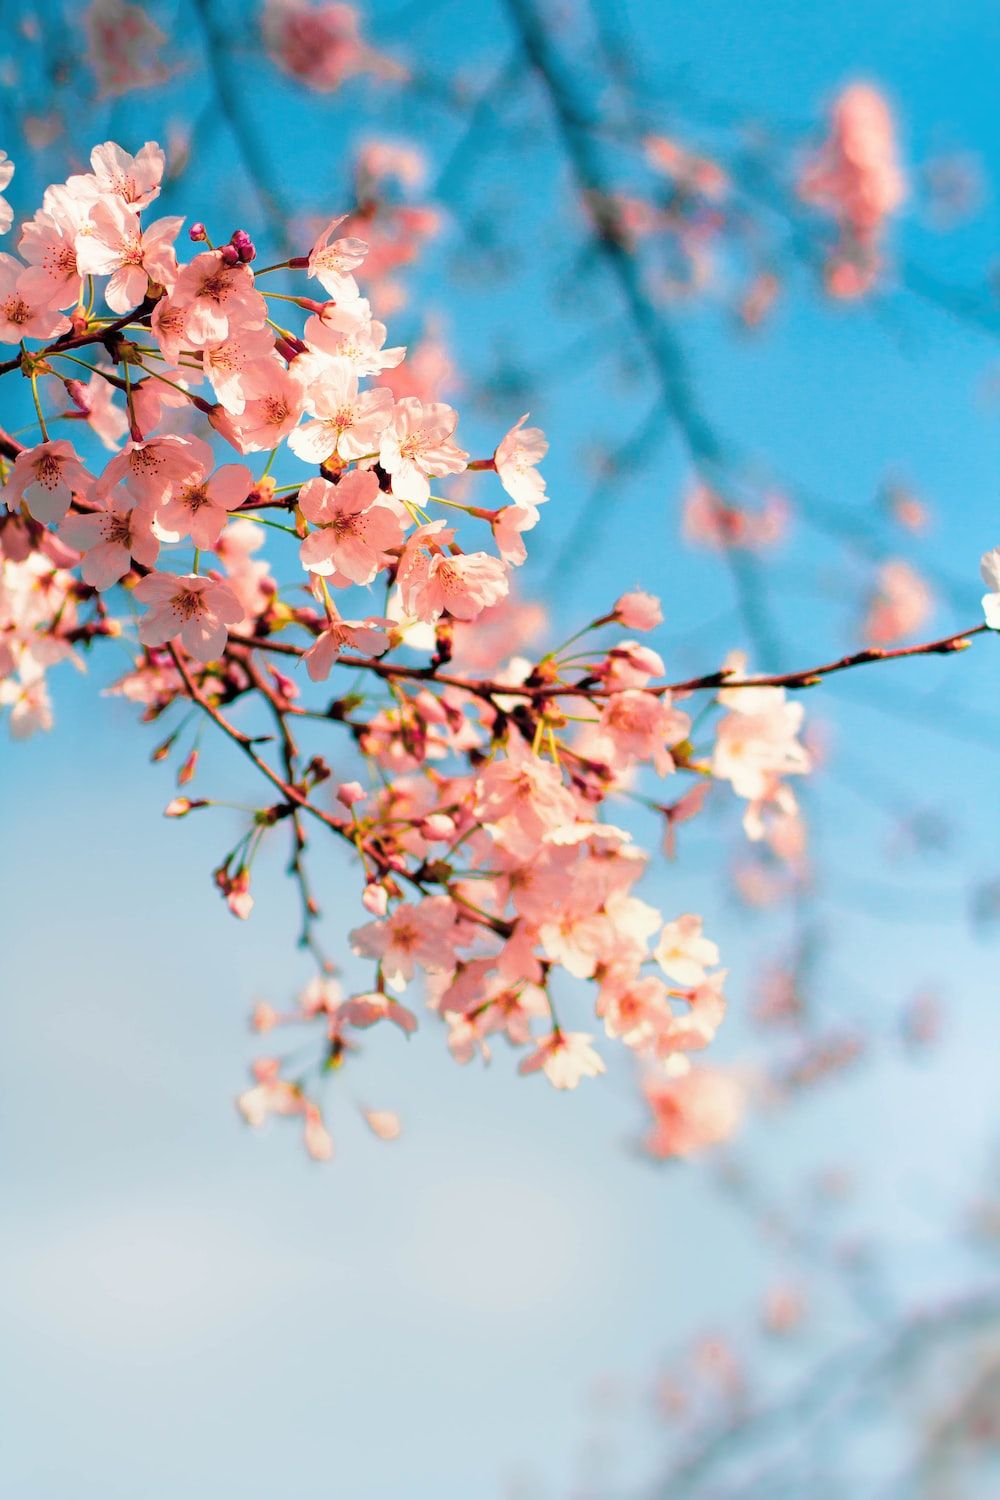 A close-up of pink cherry blossoms against a blue sky. - Cherry blossom